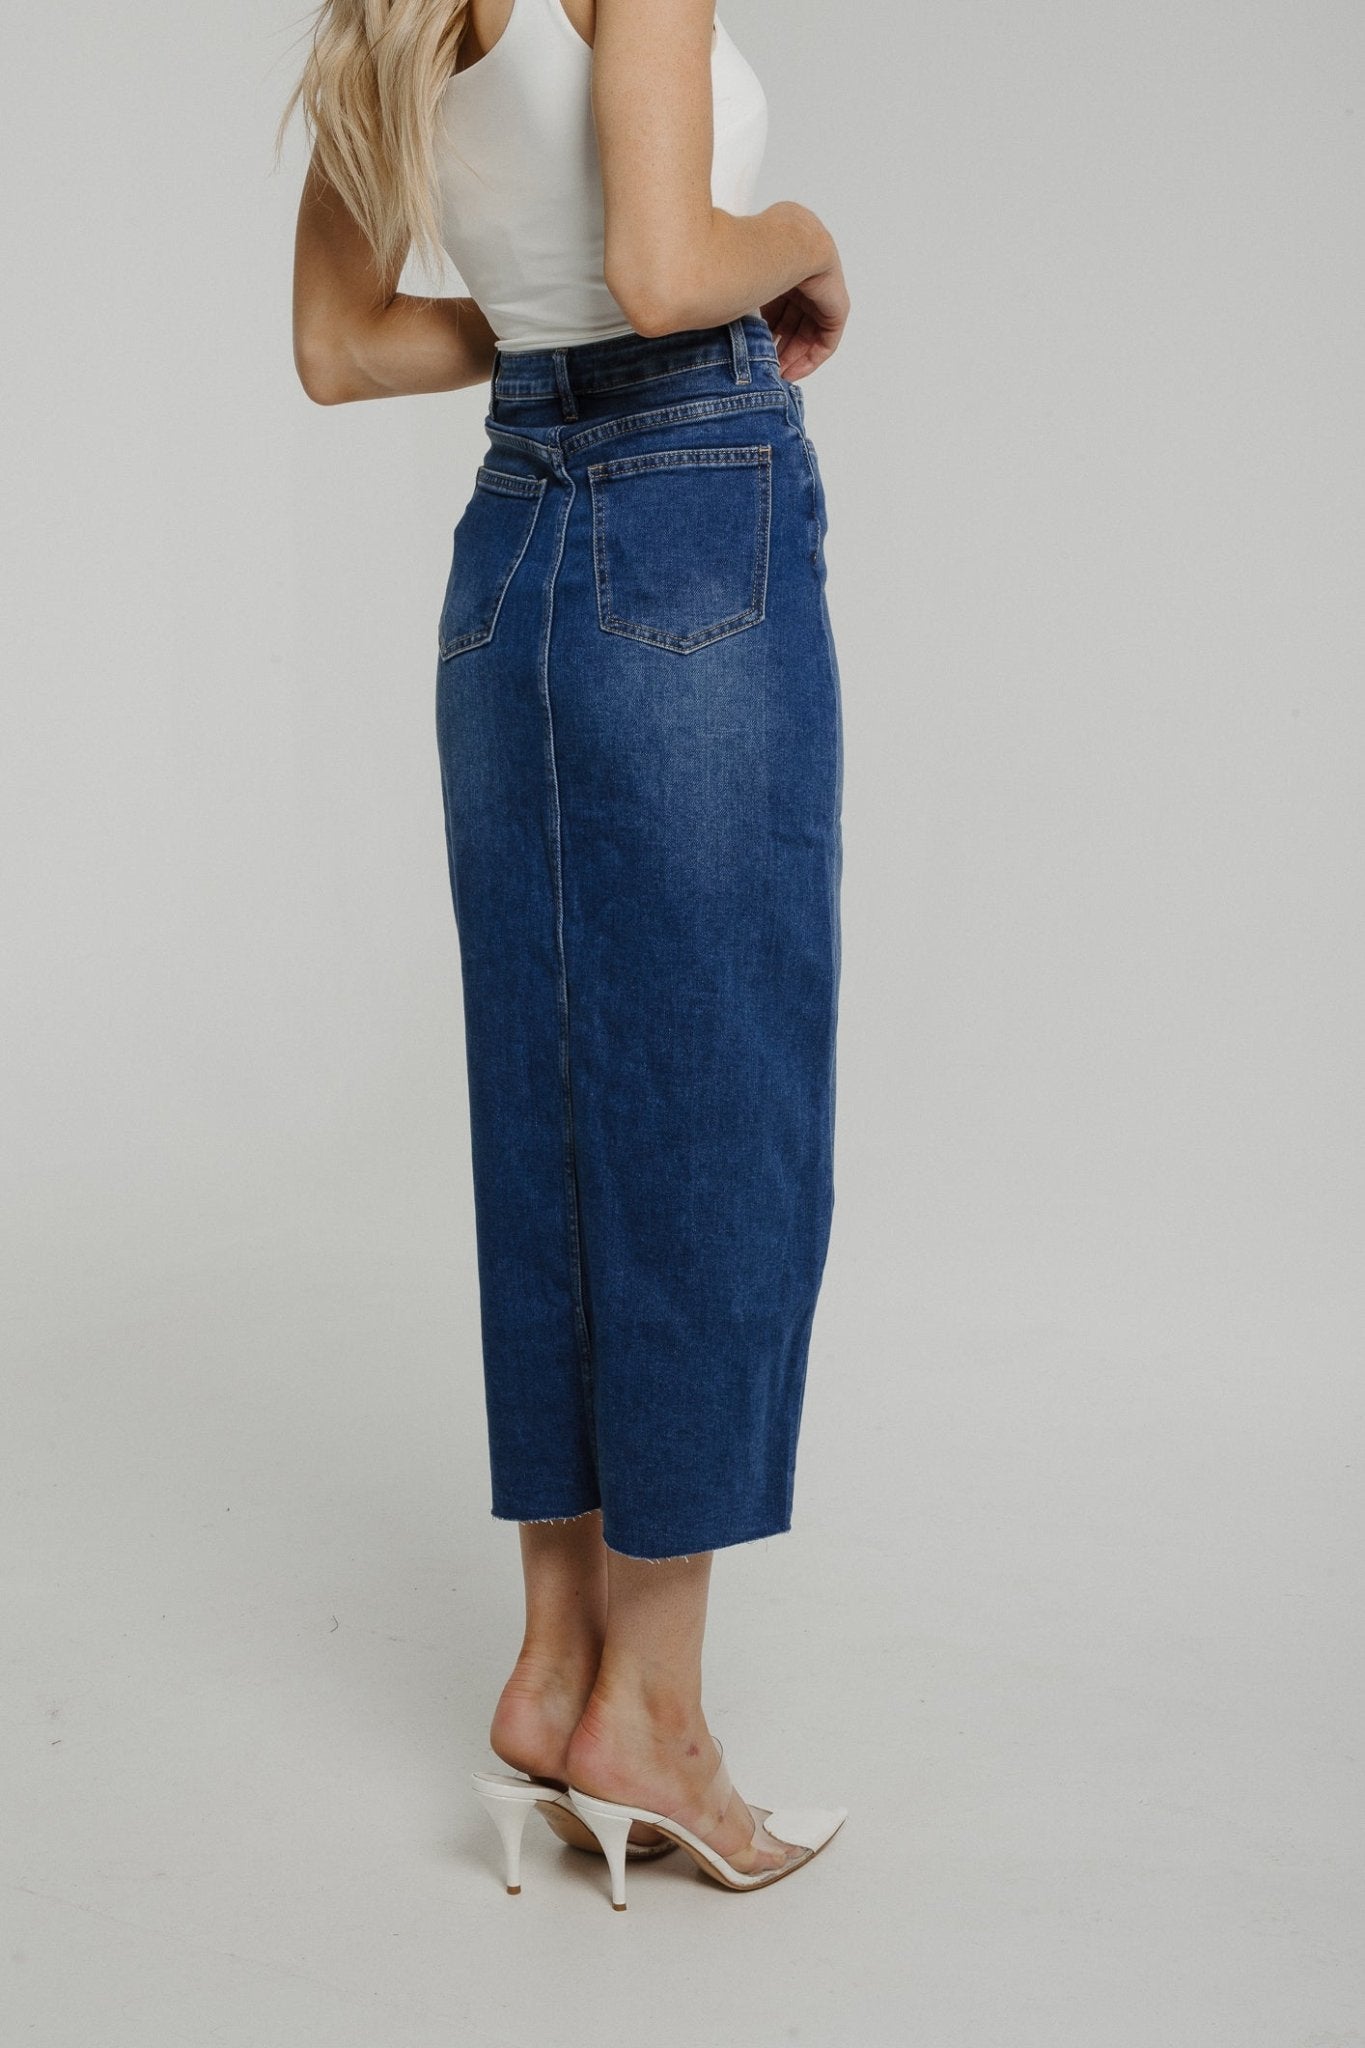 Freya Denim Asymmetric Skirt In Mid Wash - The Walk in Wardrobe